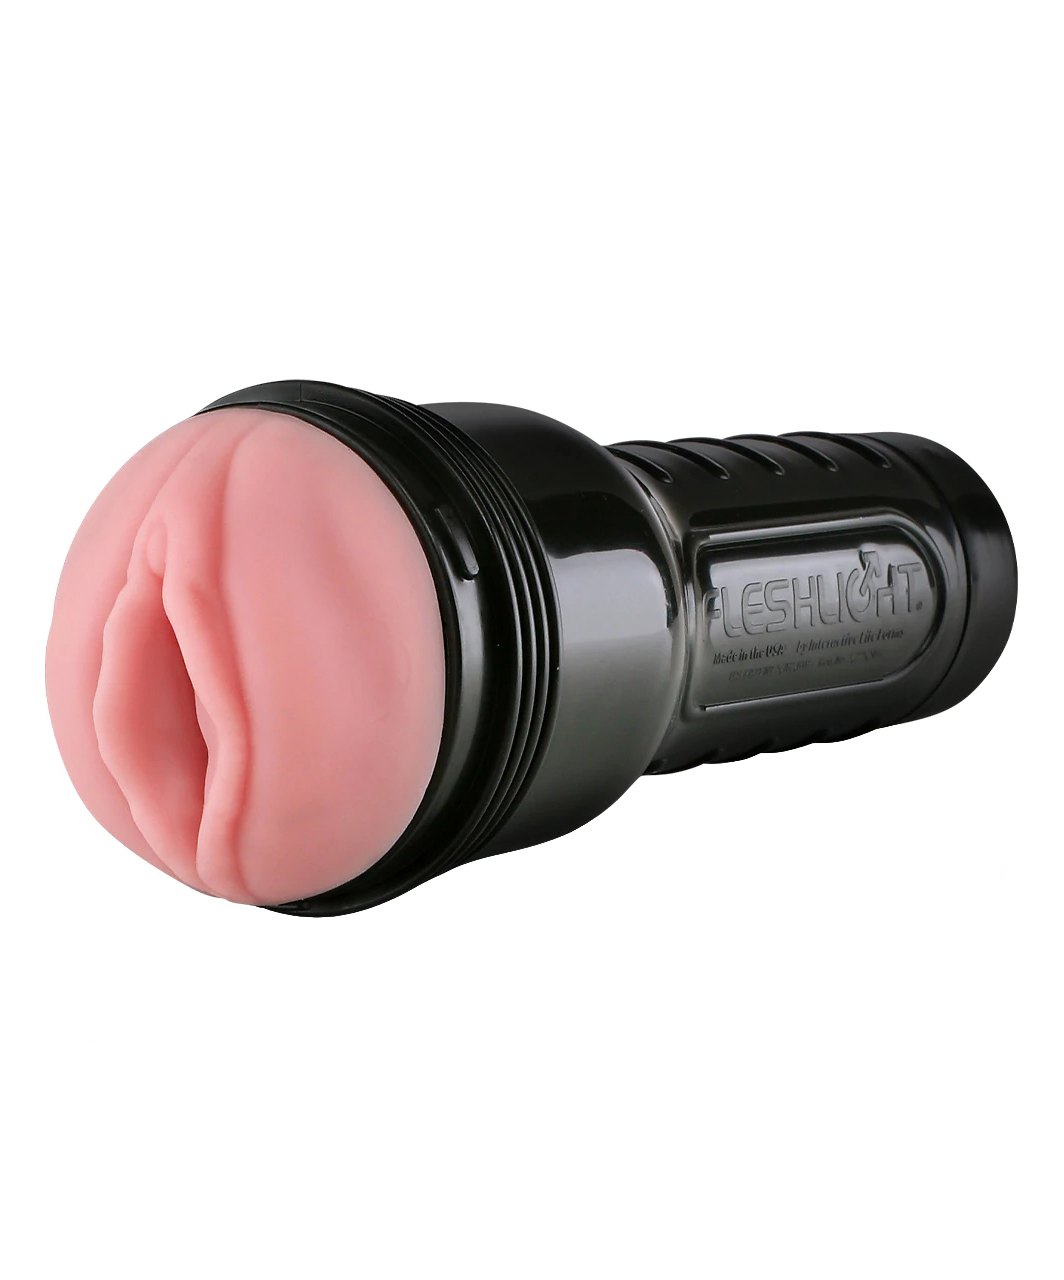 Fleshlight Pink Lady Vortex masturbaator